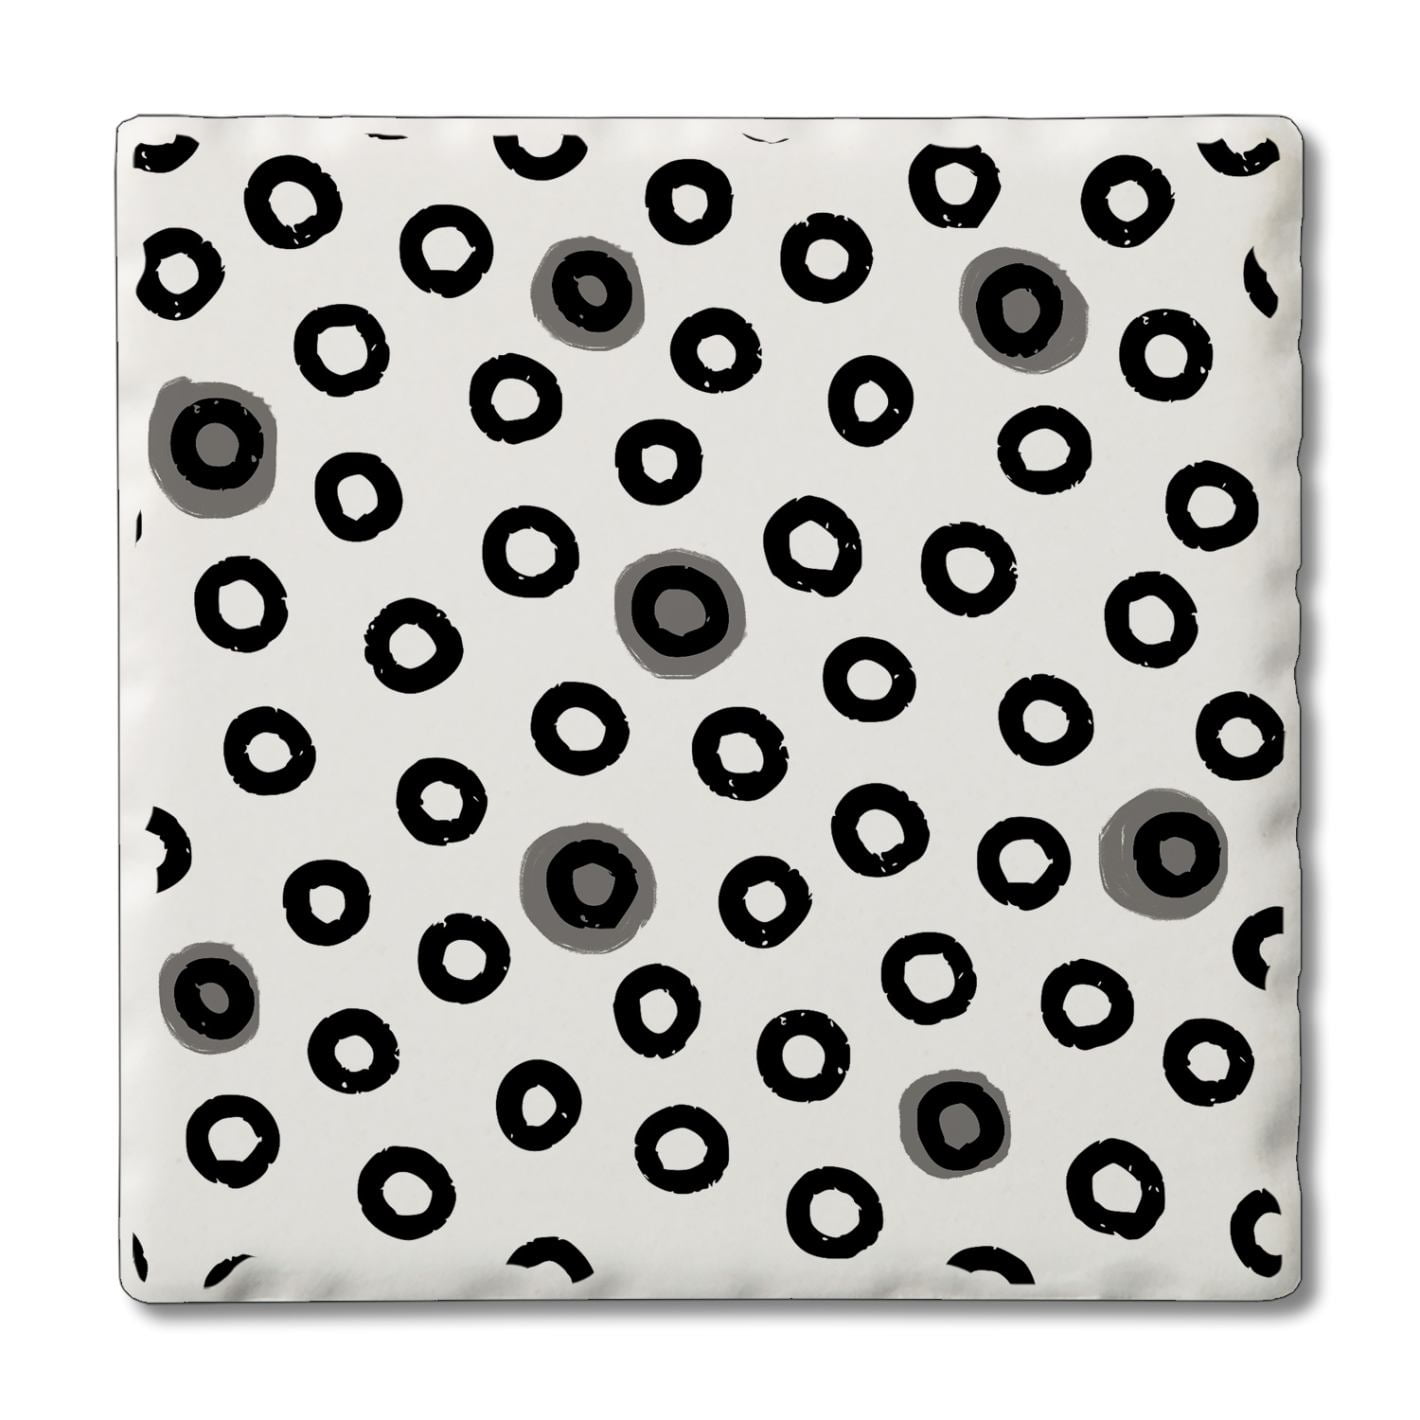 Counterart Blue & White Tile Design Absorbent Stone Tumbled Tile Coaster 4 Pack, Size: 4 x 4 x 1.5